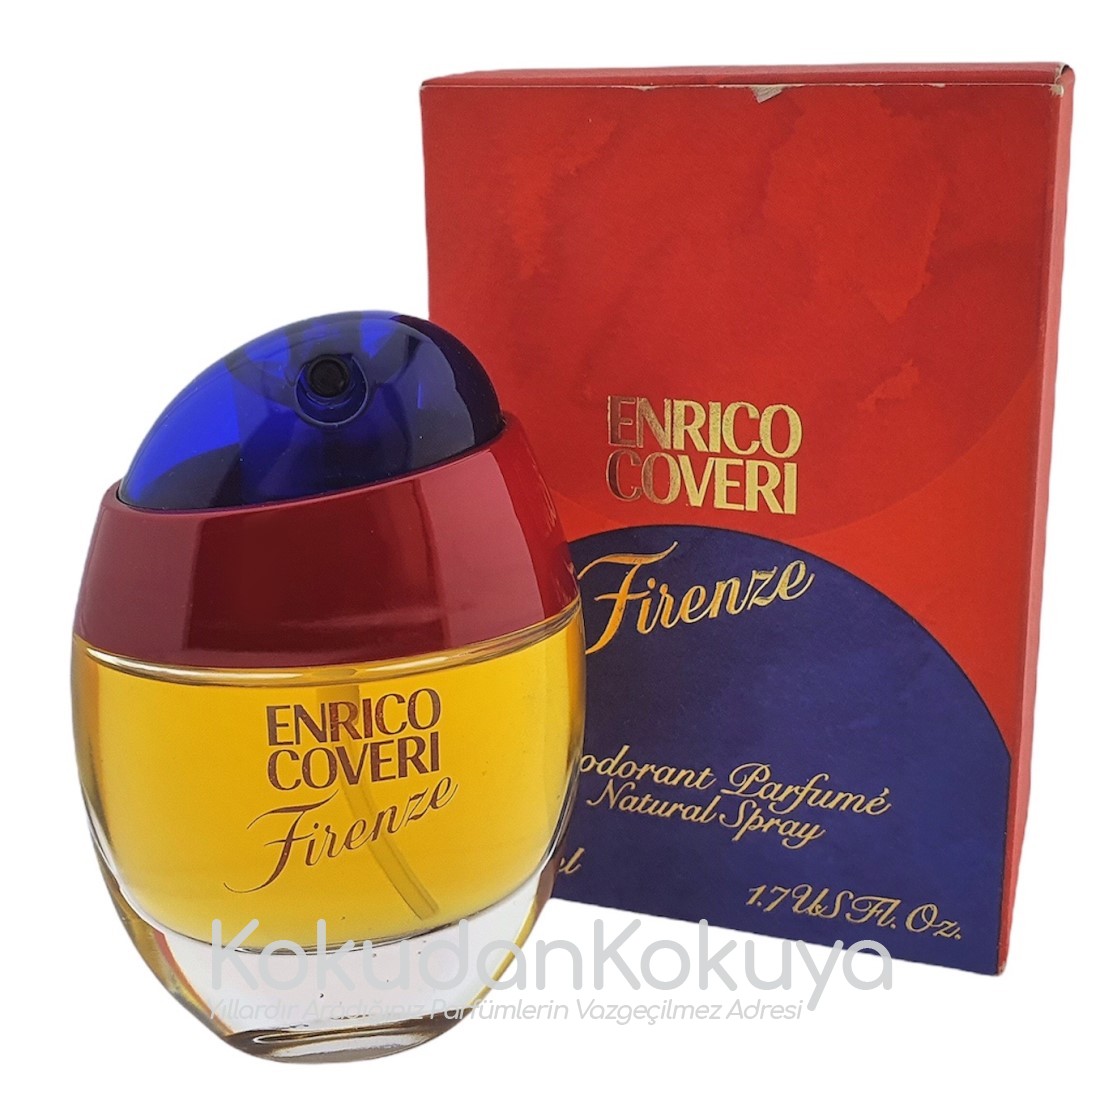 ENRICO COVERI Firenze (Vintage) Deodorant Kadın 50ml Deodorant Spray (Cam) 